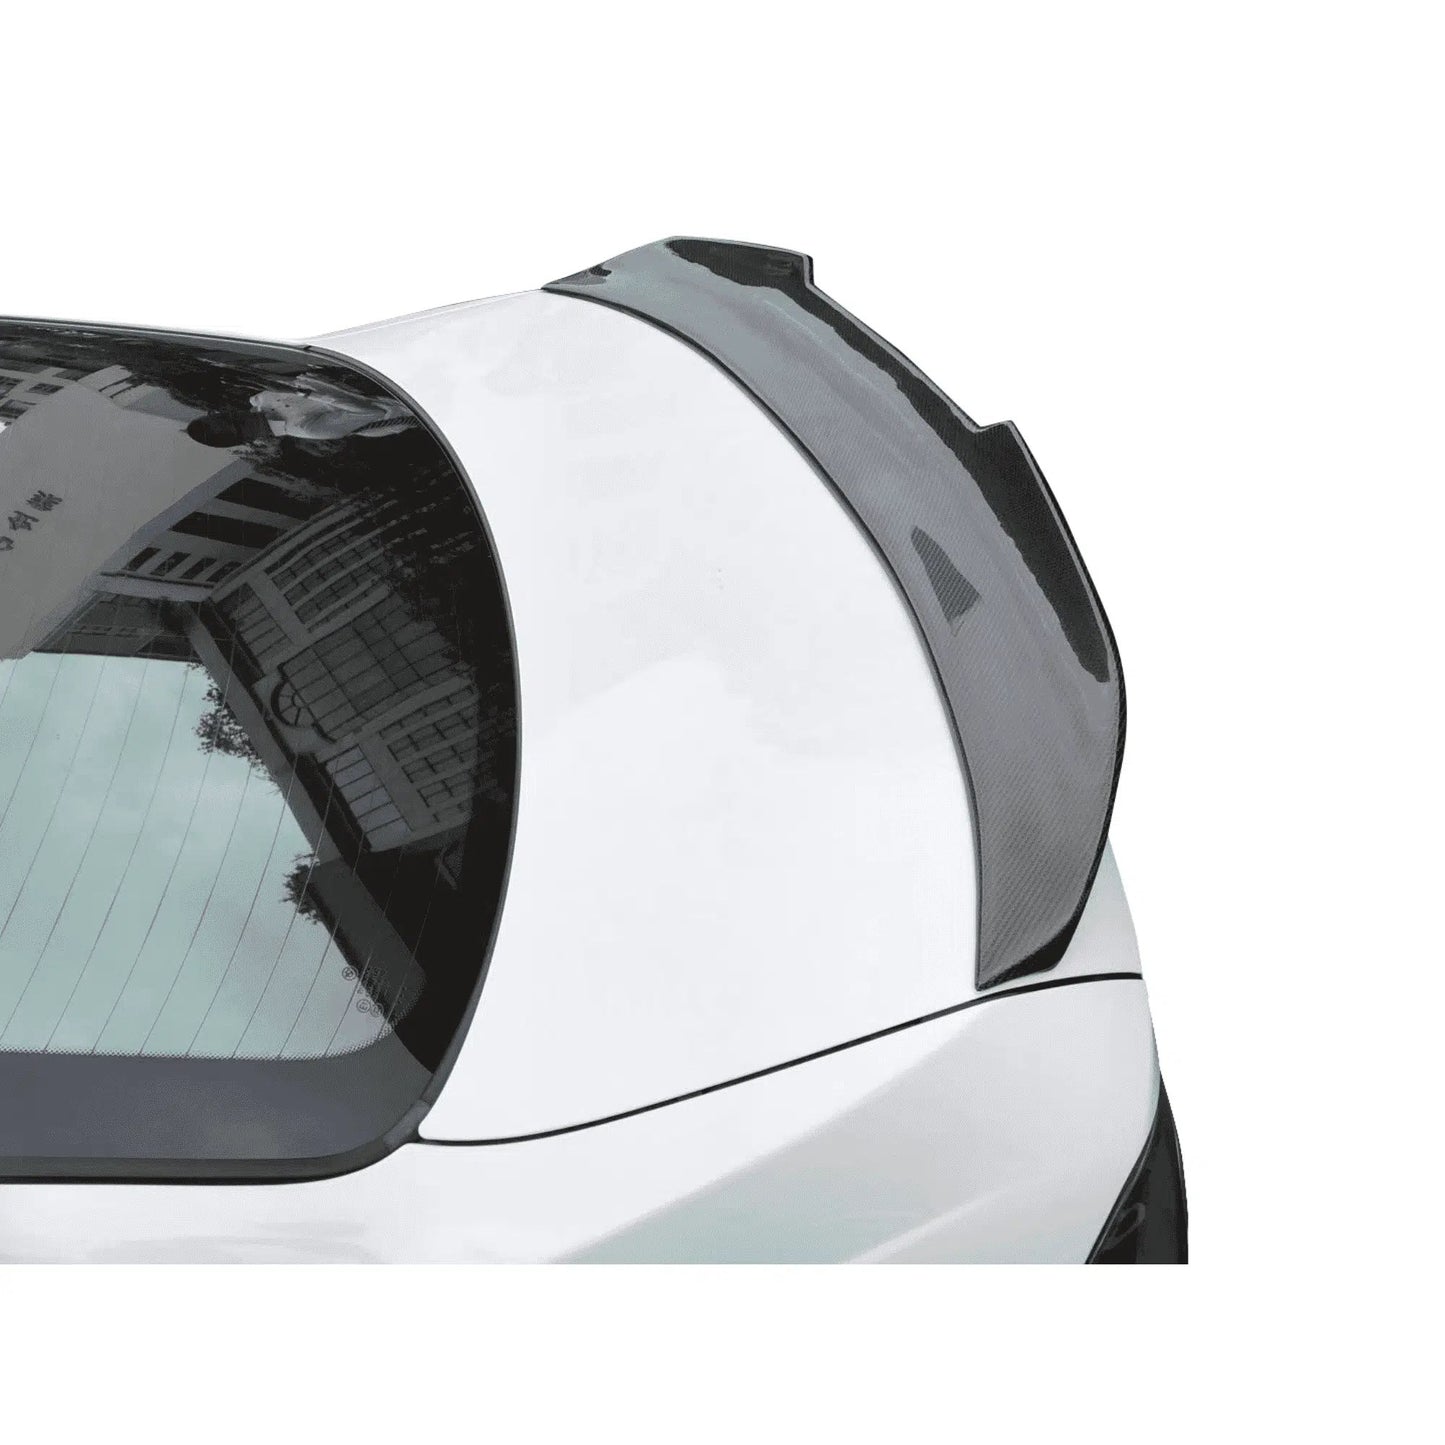 Suvneer PSM Designed E90 Carbon Fiber Spoiler